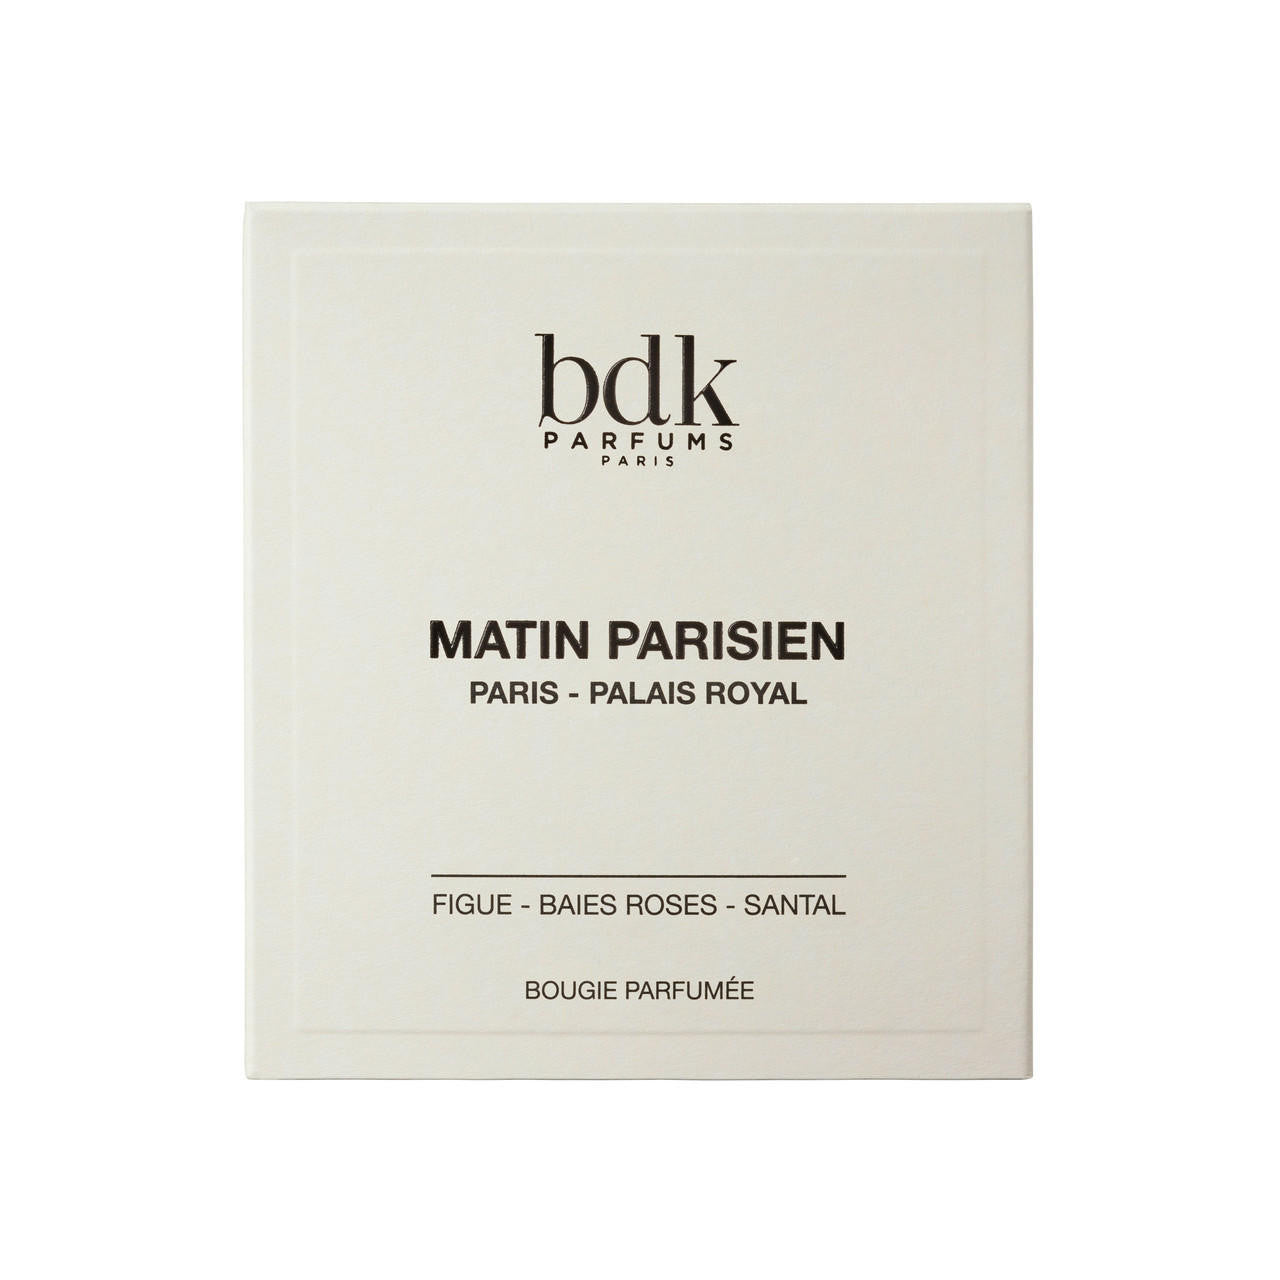  BDK Parfums MATIN PARISIEN Candle 